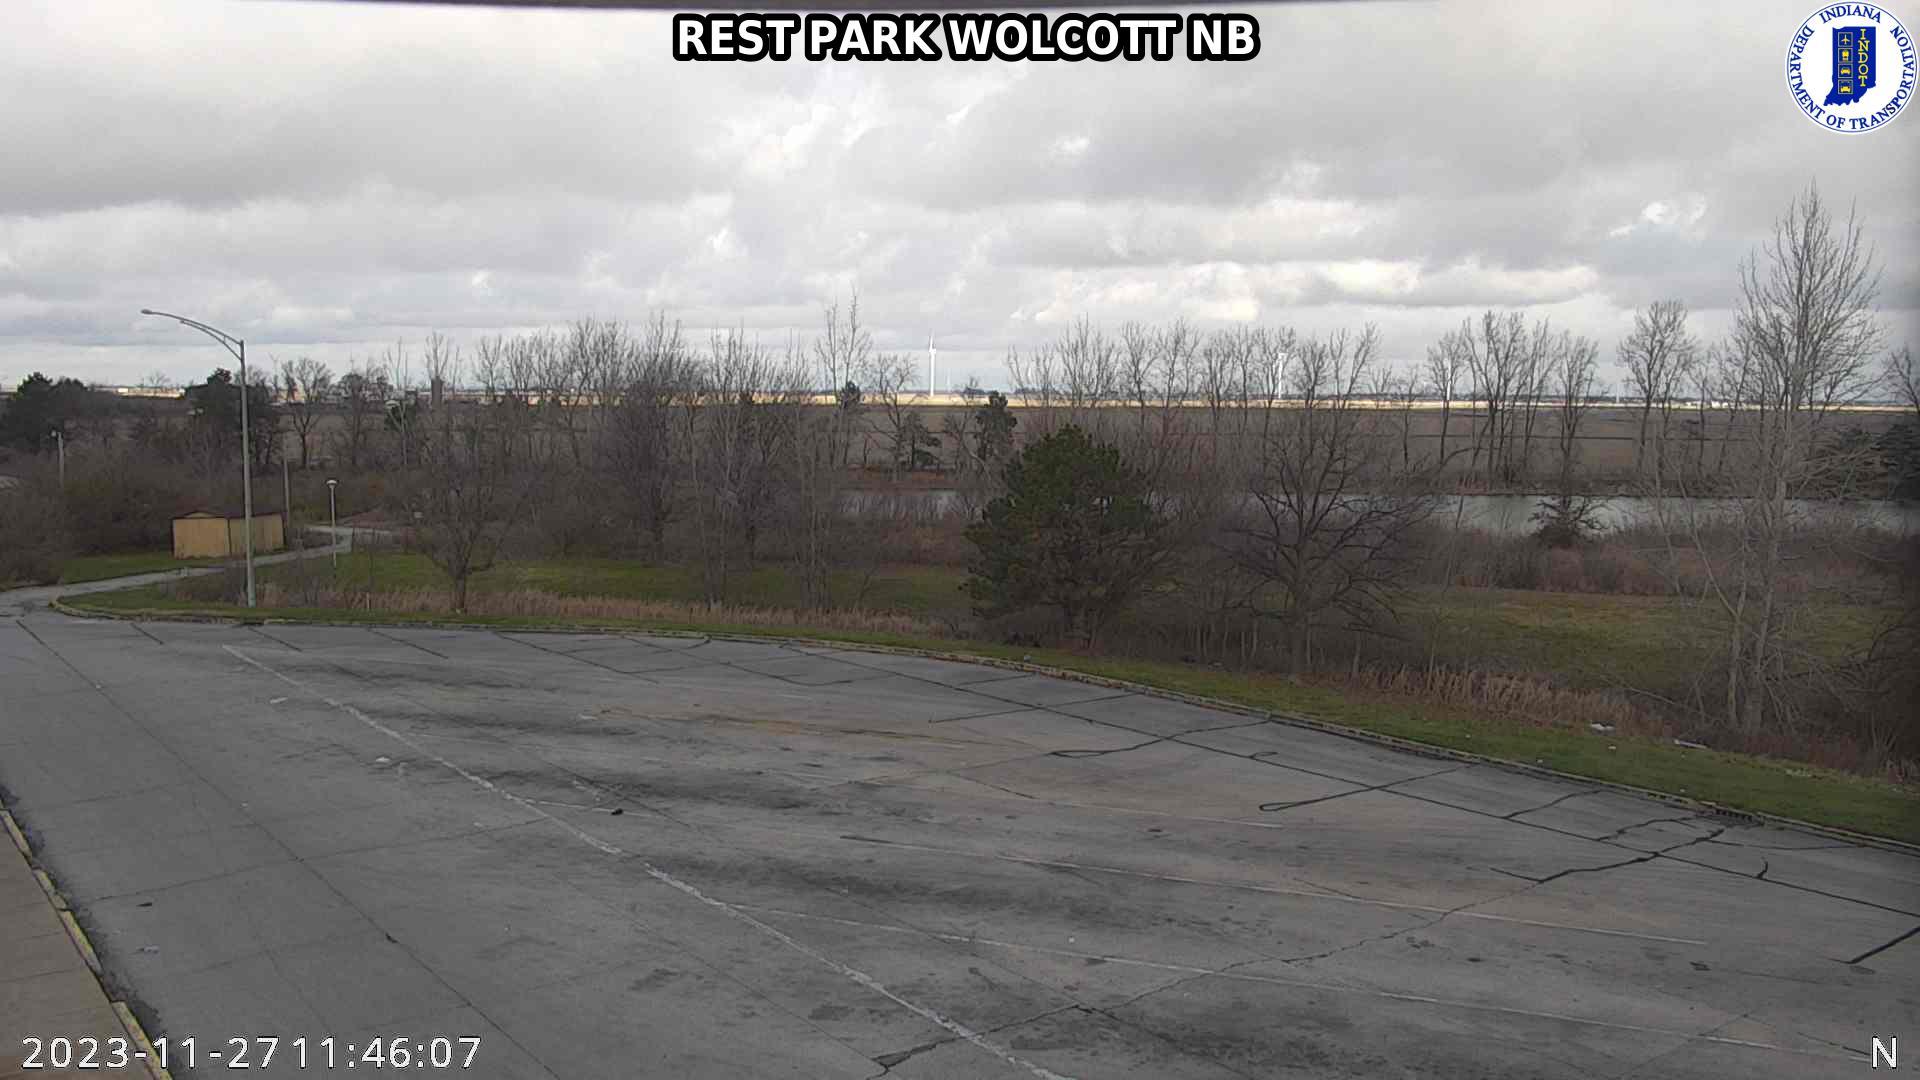 Traffic Cam Wolcott: I-65: REST PARK - NB Player